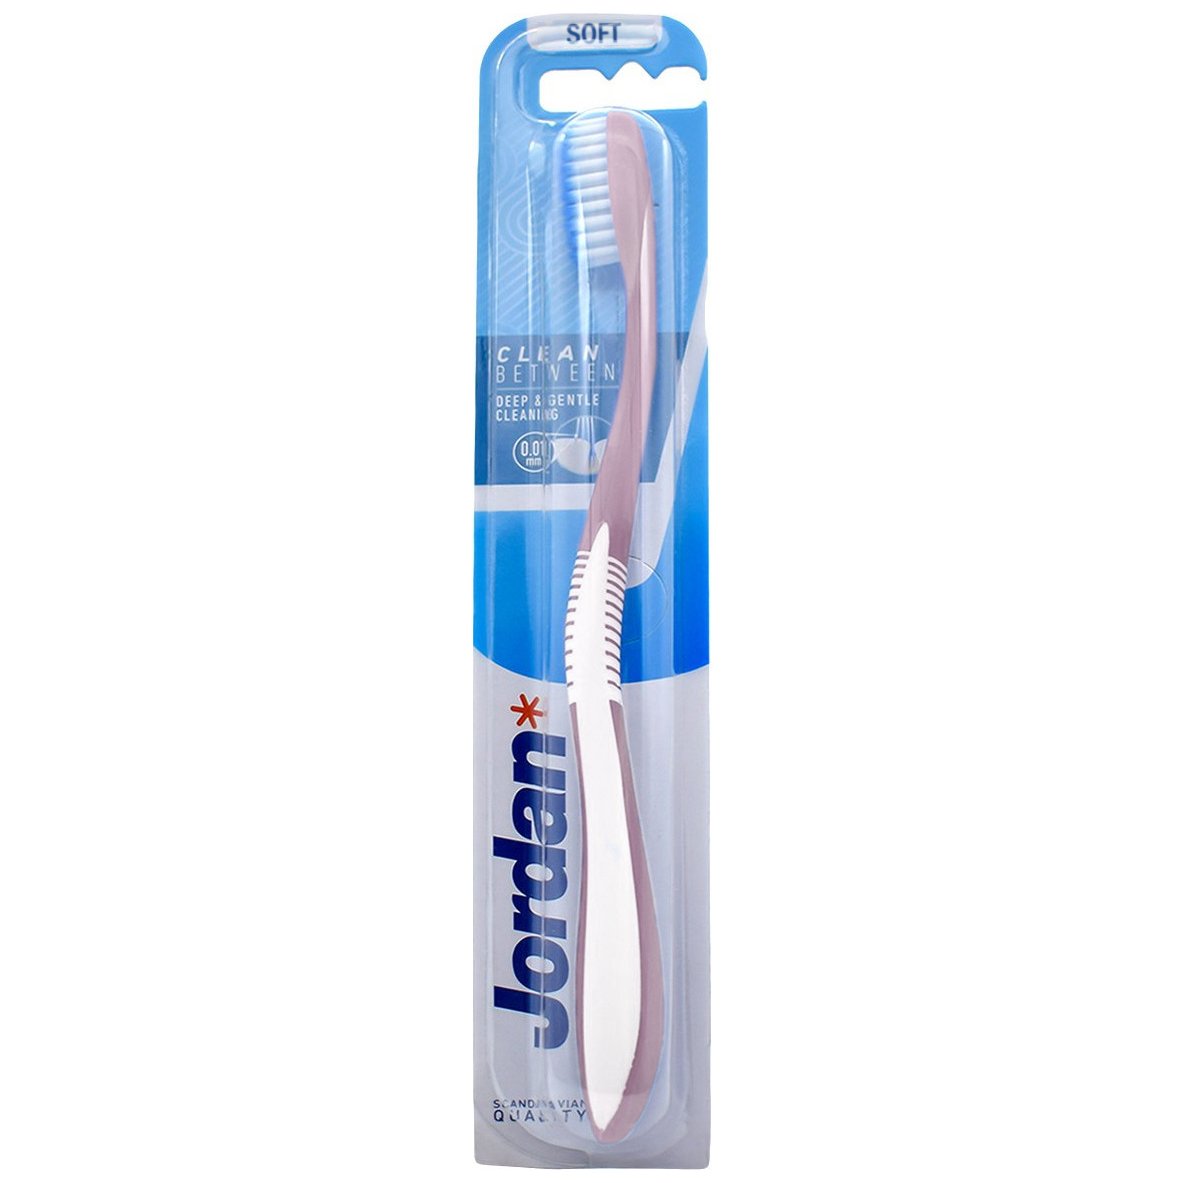 Jordan Clean Between Toothbrush Soft 0.01mm Μαλακή Οδοντόβουρτσα για Βαθύ Καθαρισμό με Εξαιρετικά Λεπτές Ίνες 1 Τεμάχιο, Κωδ 310036 – Ροζ